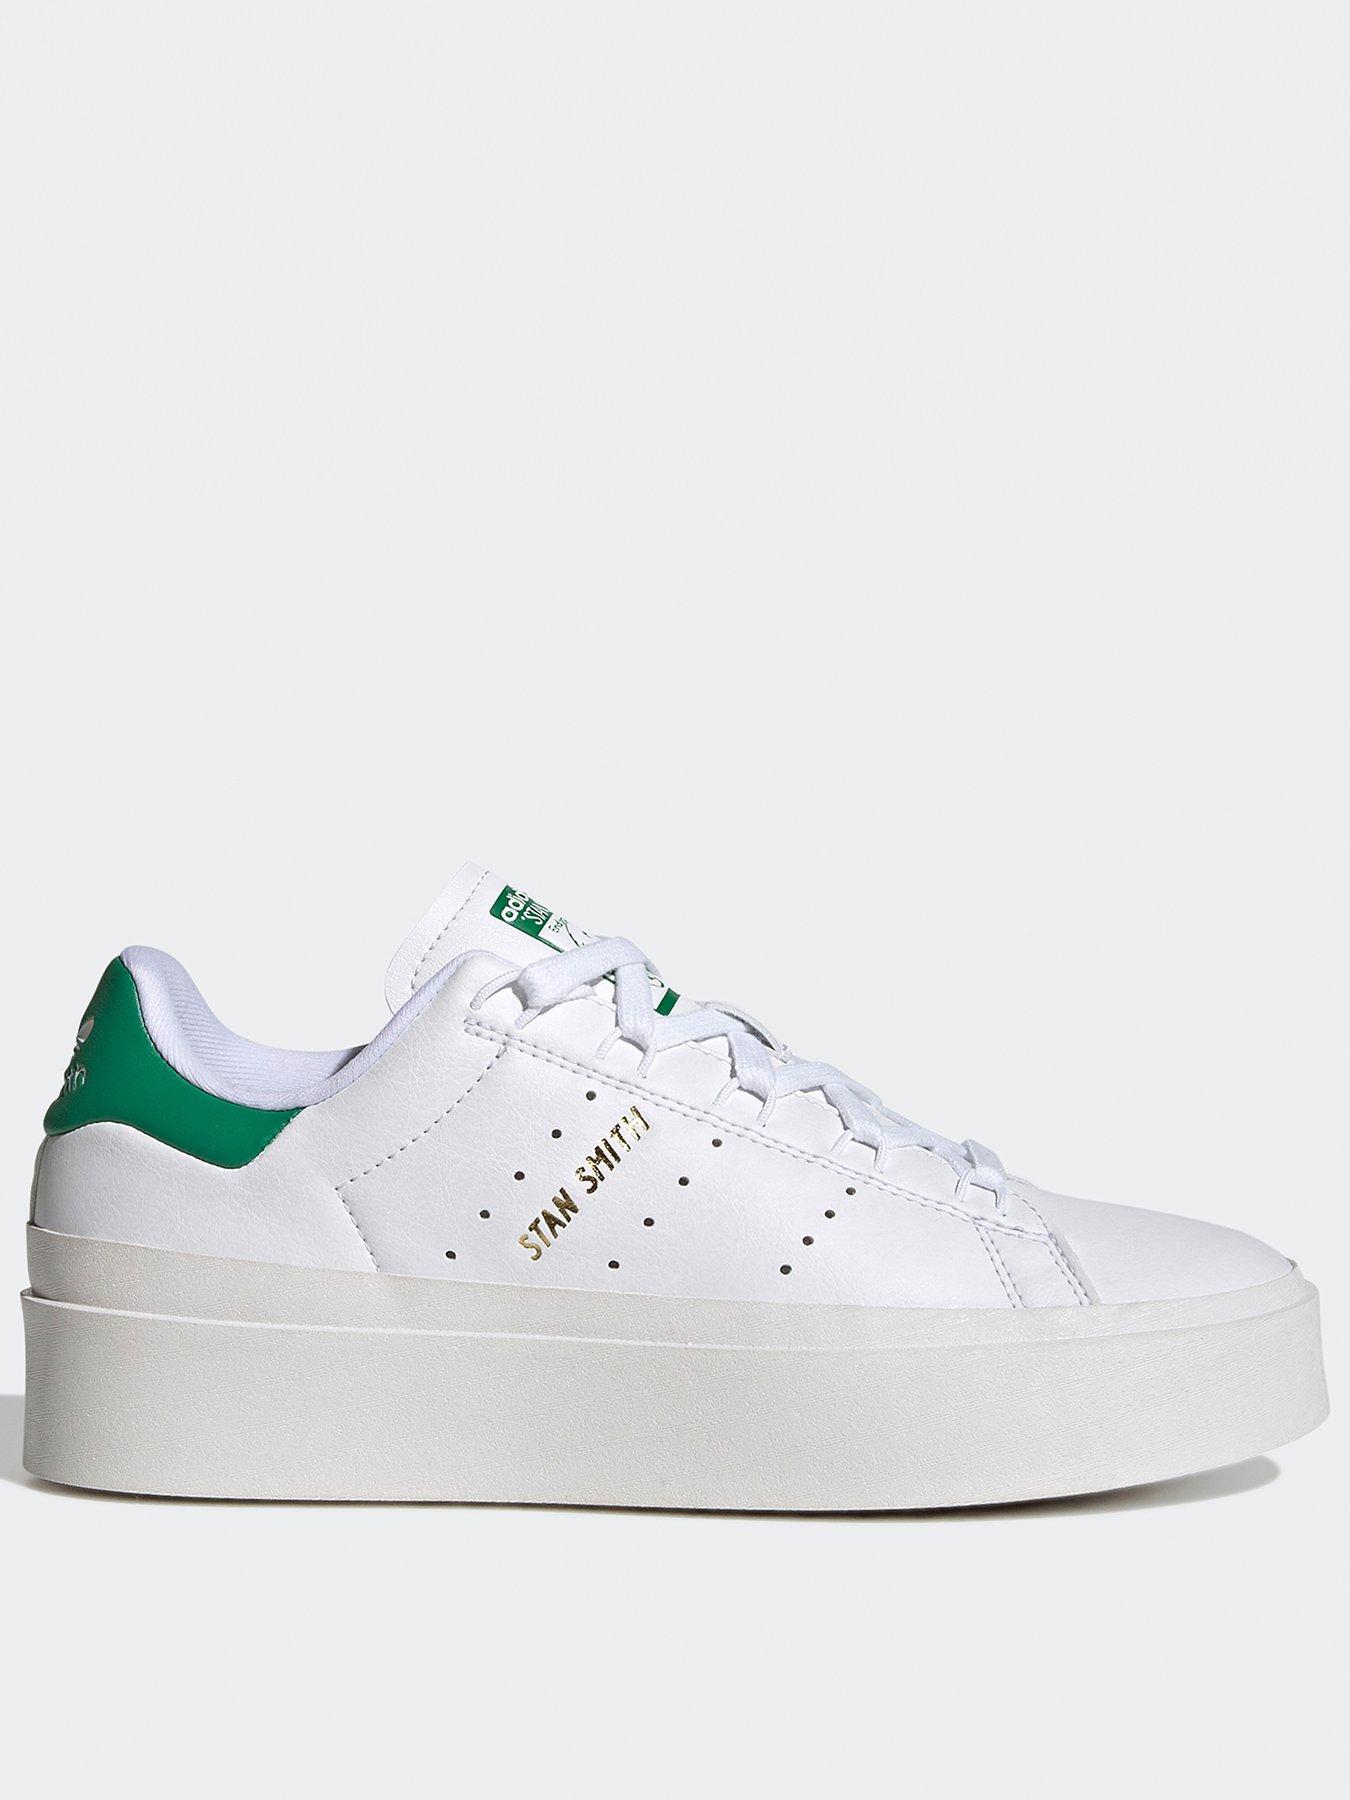 Boer negatief Psychiatrie adidas Originals Stan Smith Bonega Shoes - White/Green | very.co.uk